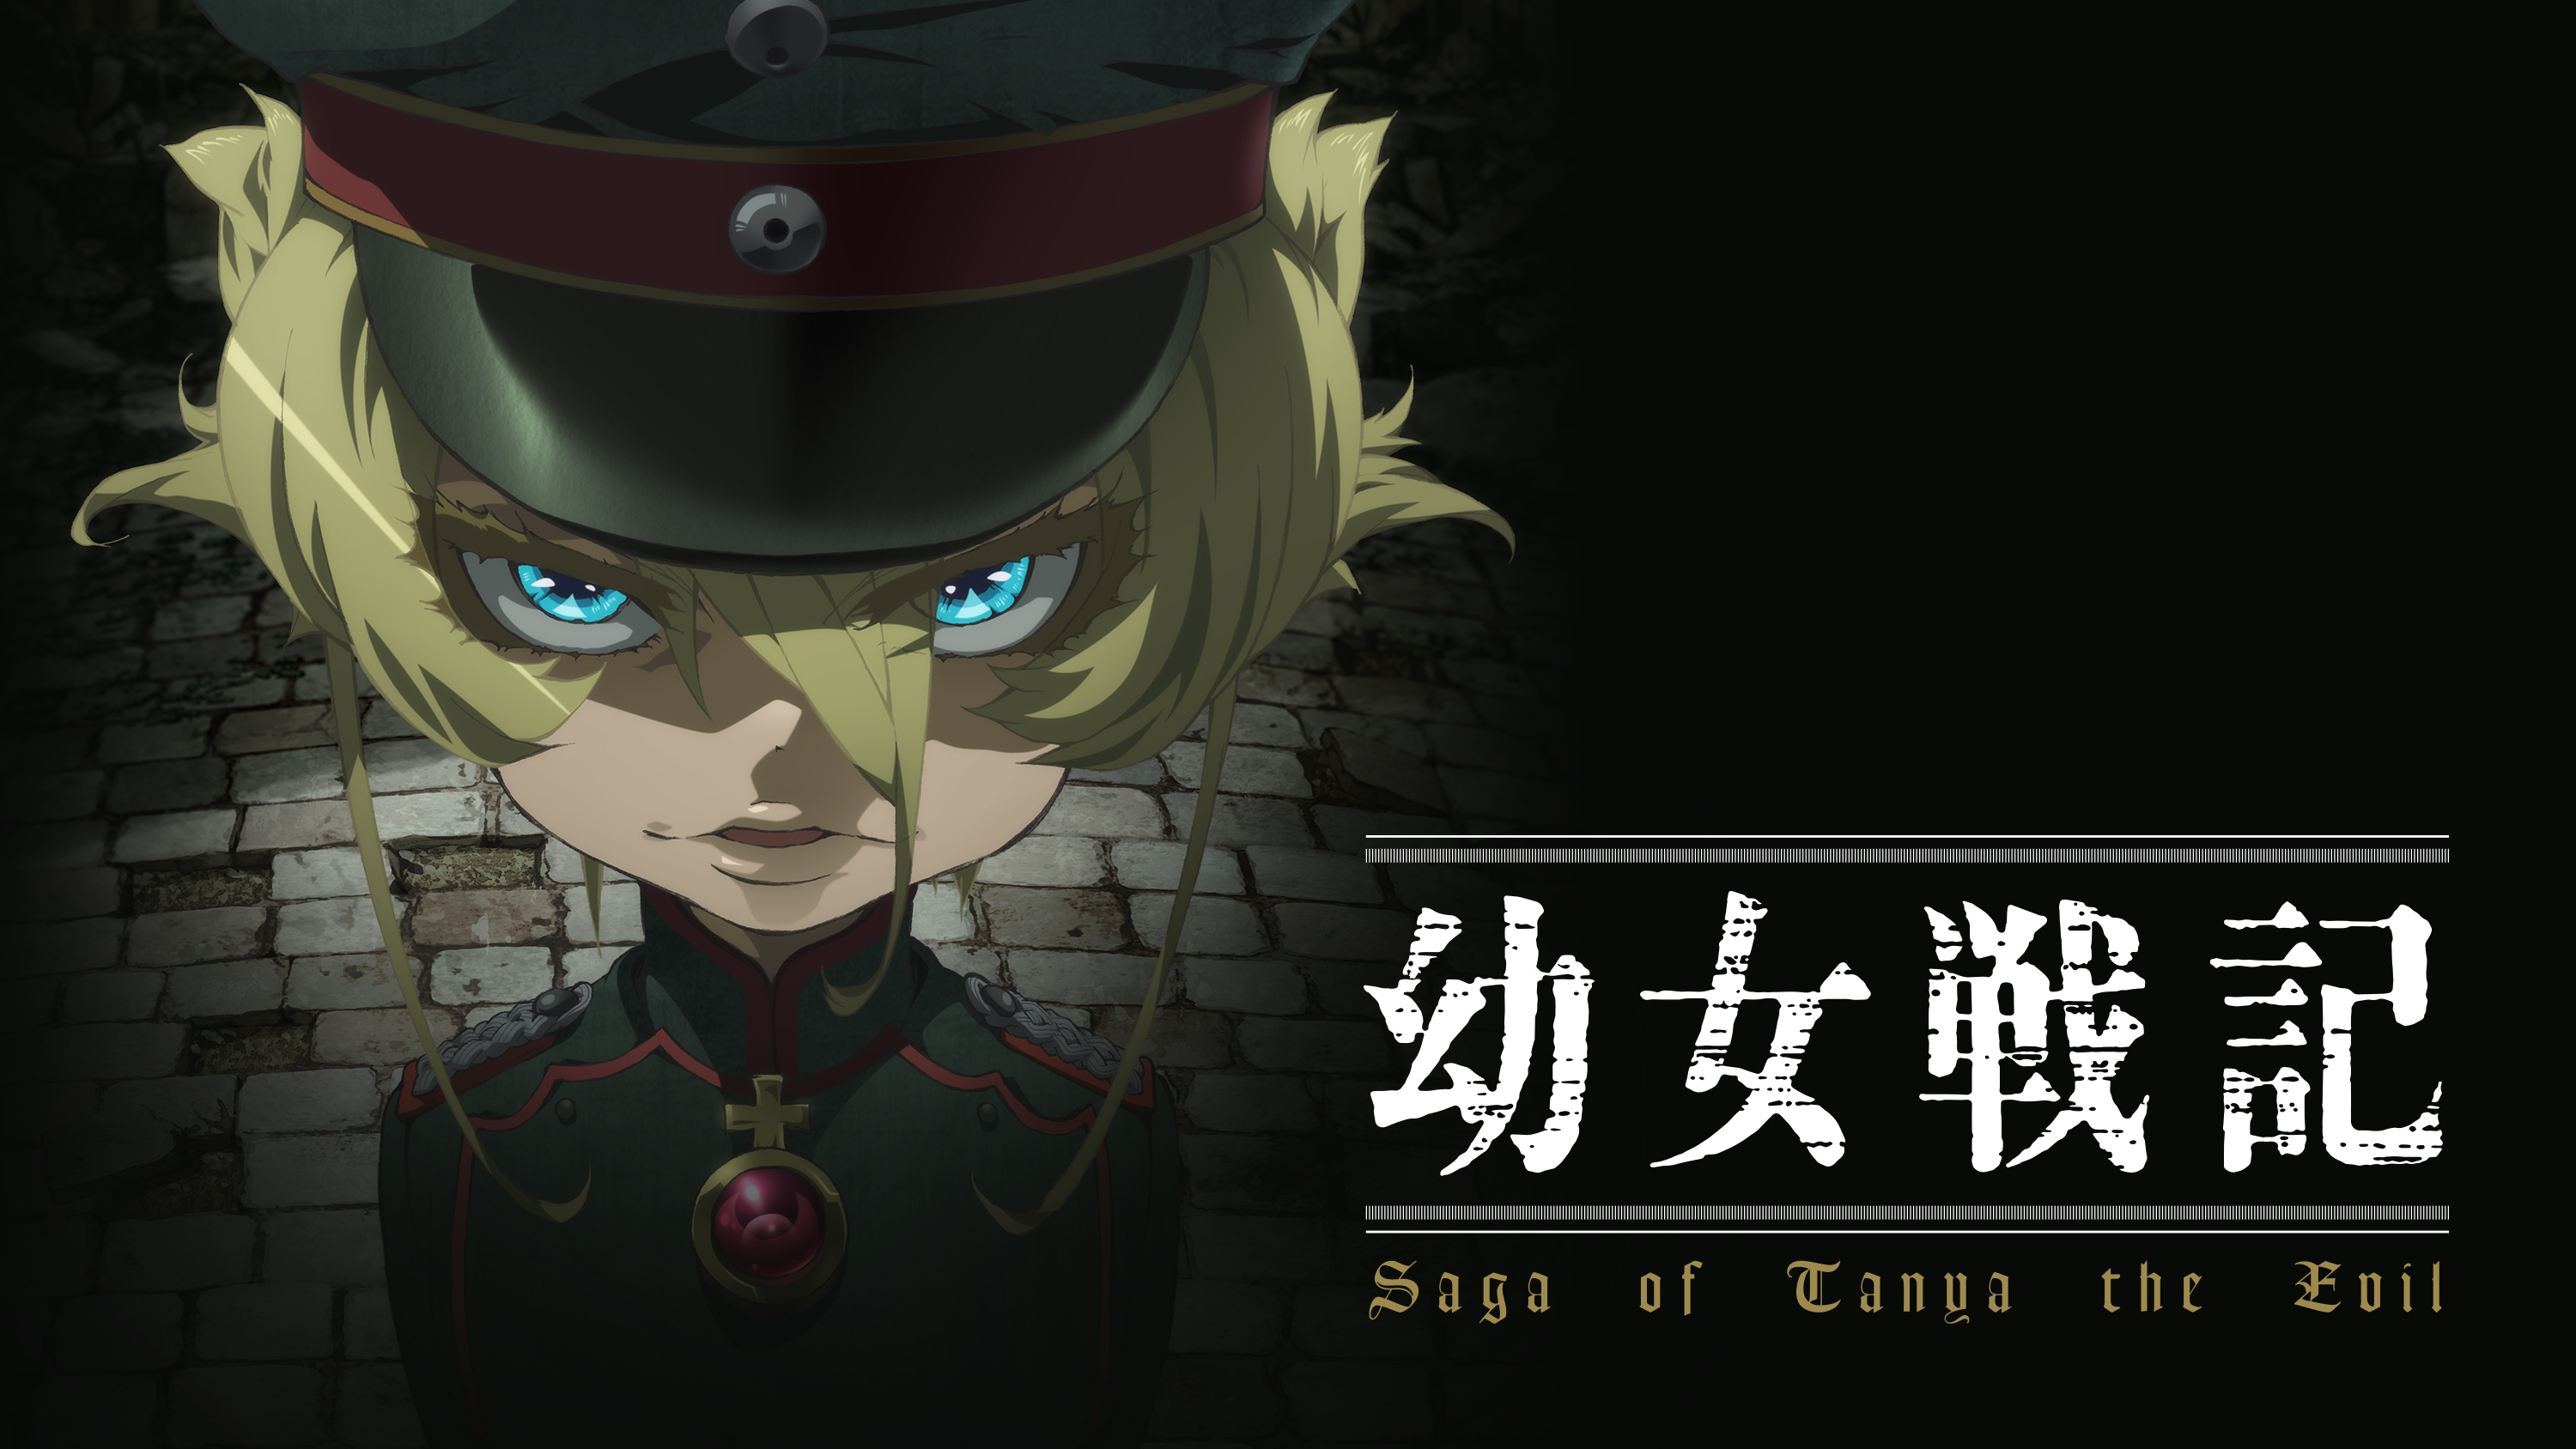 Best war anime - Saga of tanya the evil